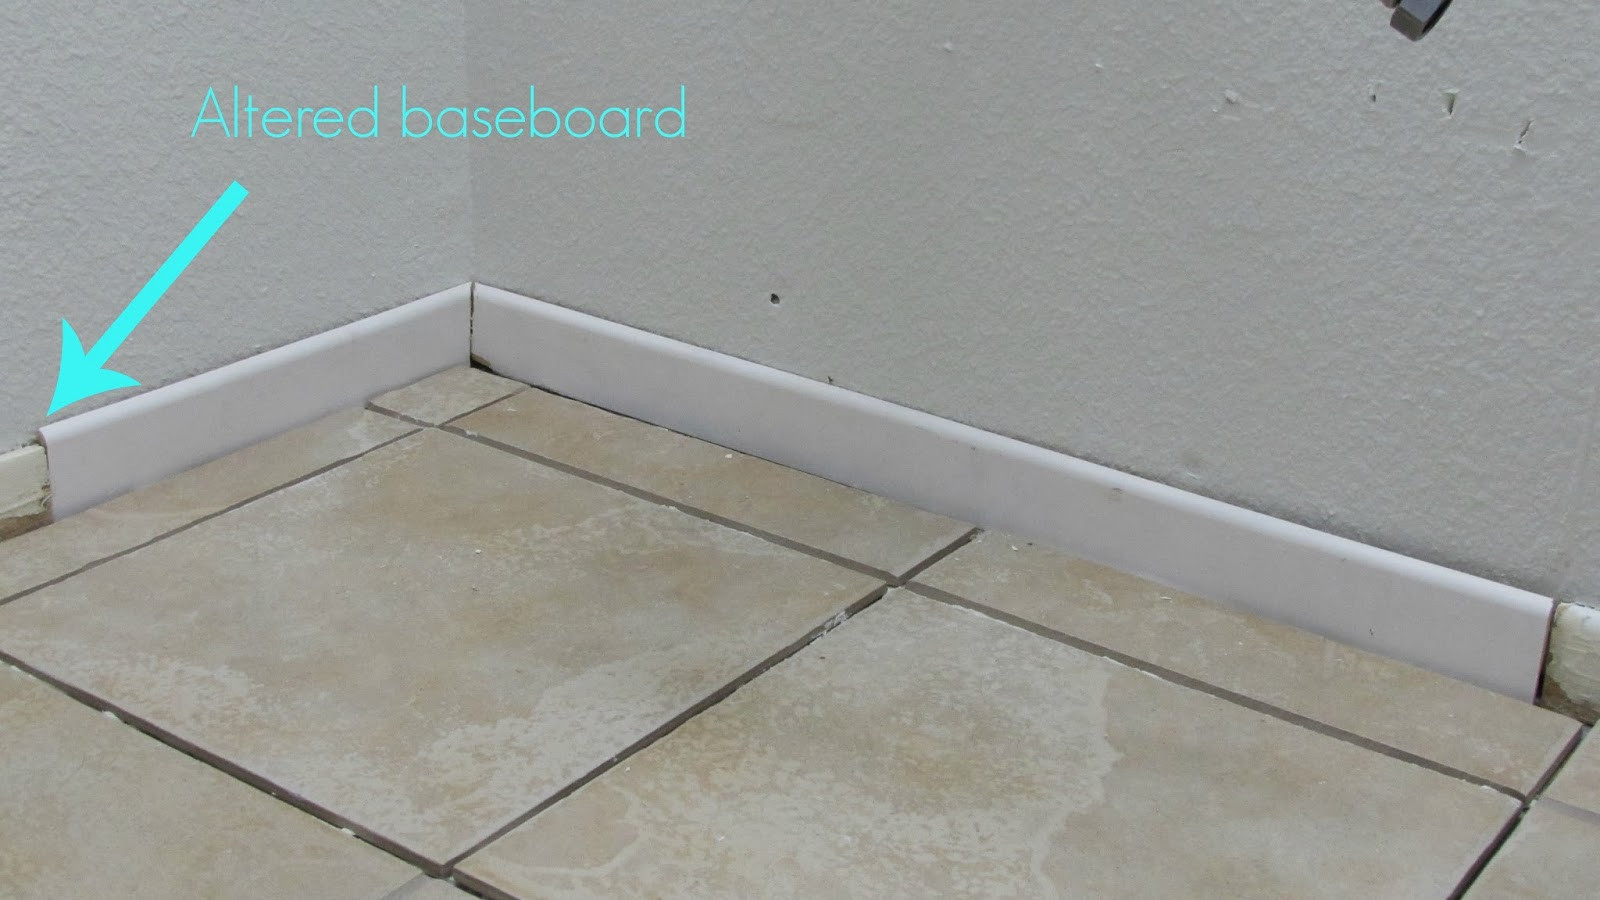 Tile Baseboard In Bathroom
 Adventures in DIY Hall Bathroom Reno Baseboards